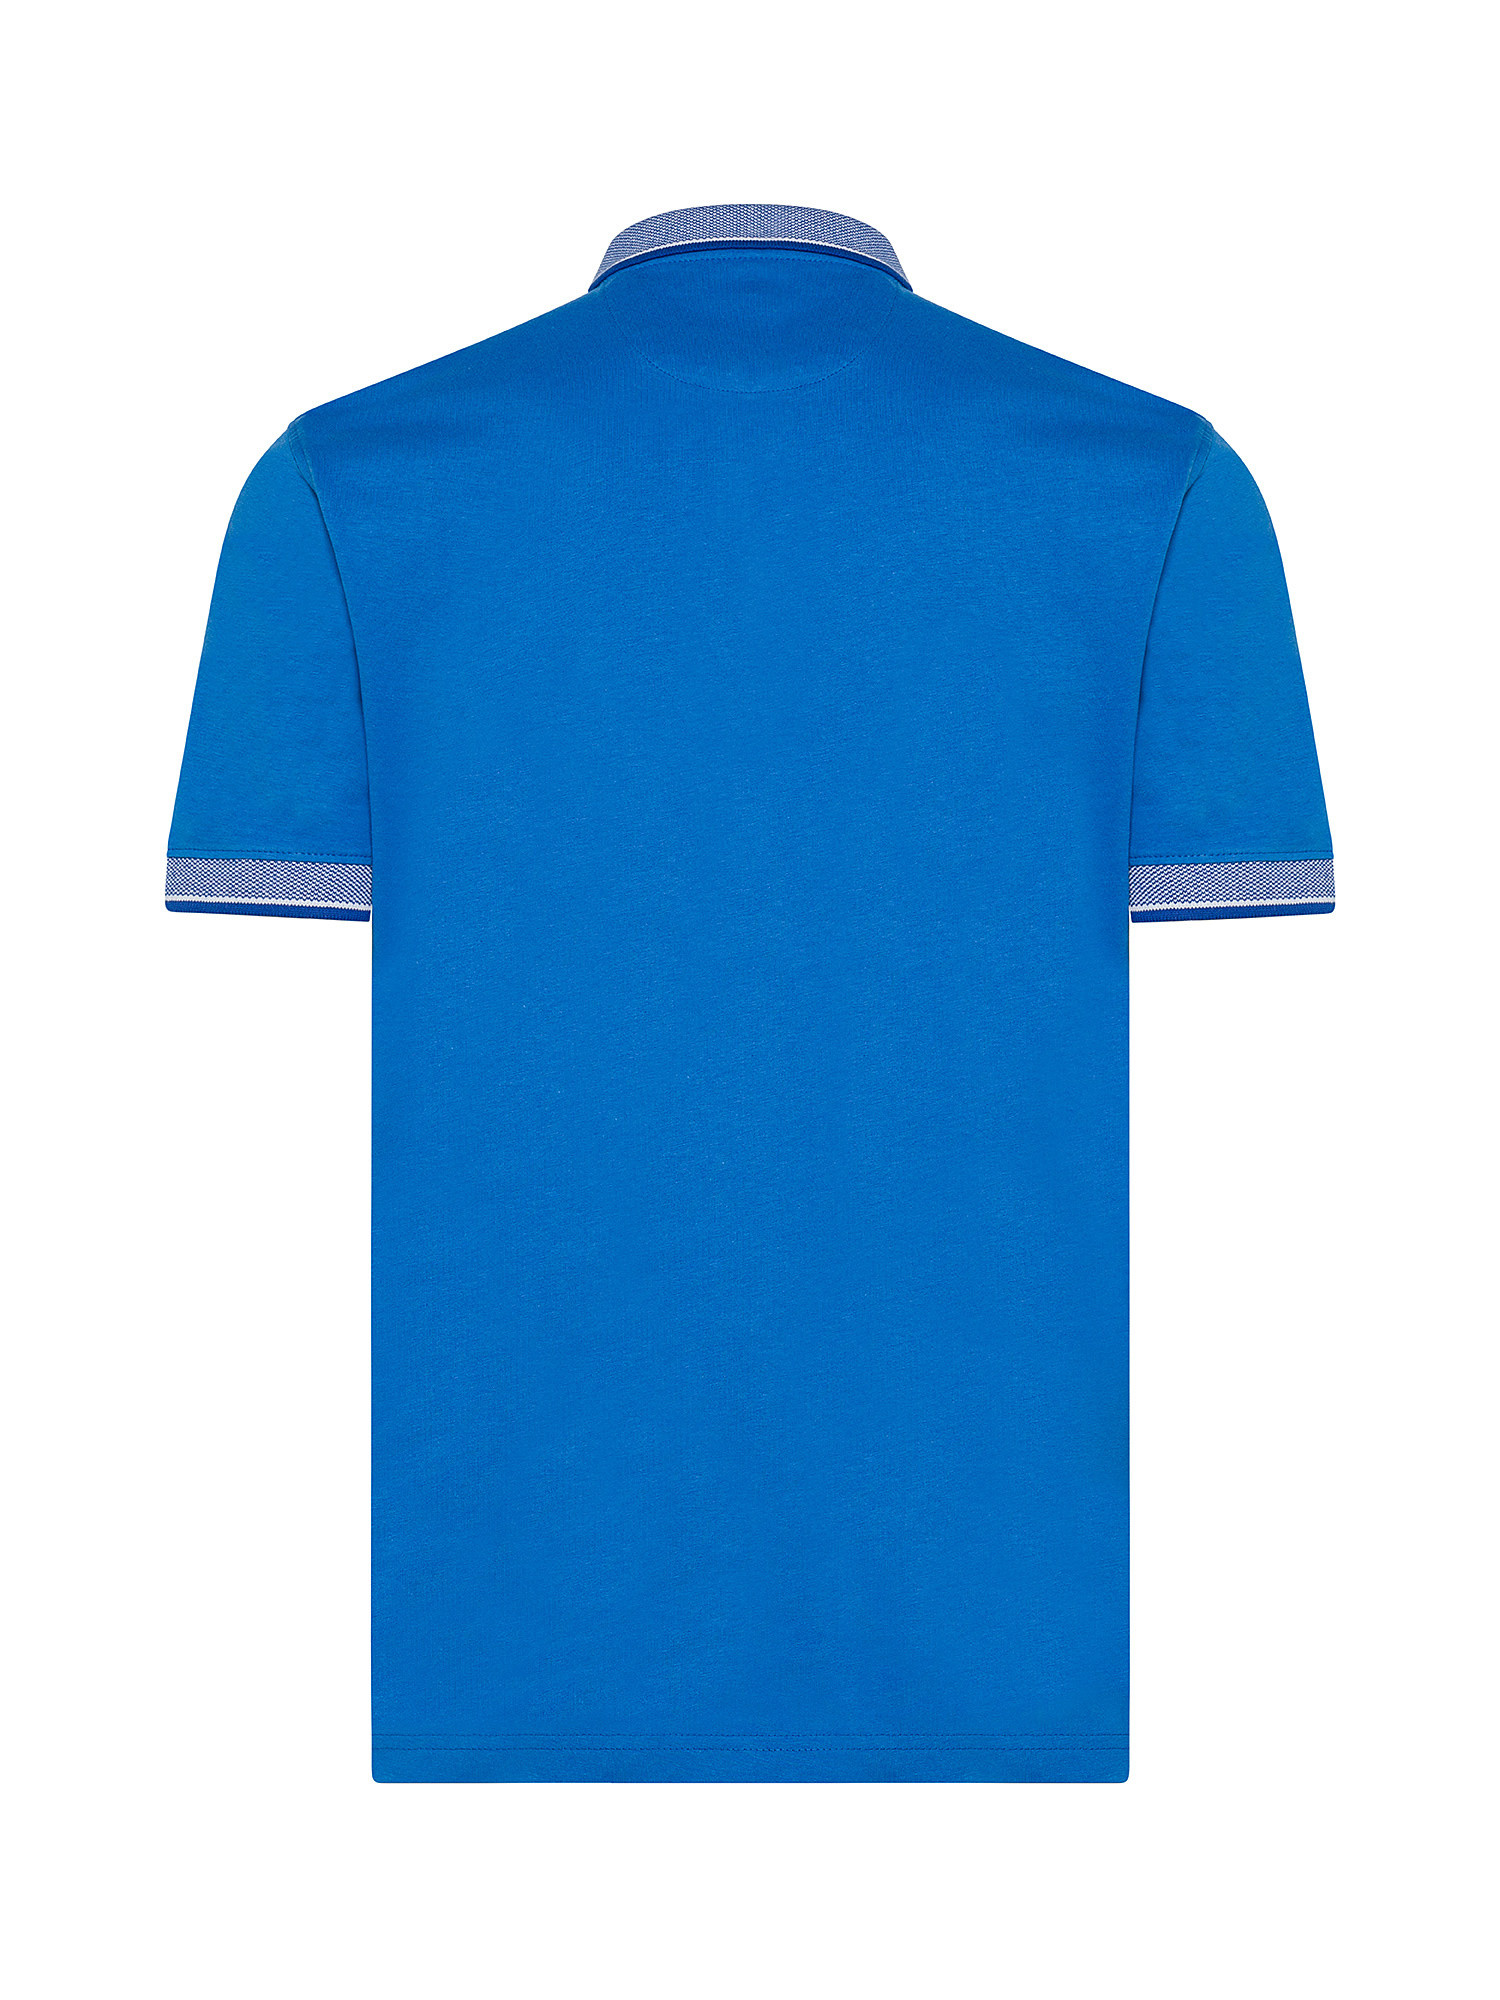 Luca D'Altieri - Jersey polo shirt, Royal Blue, large image number 1